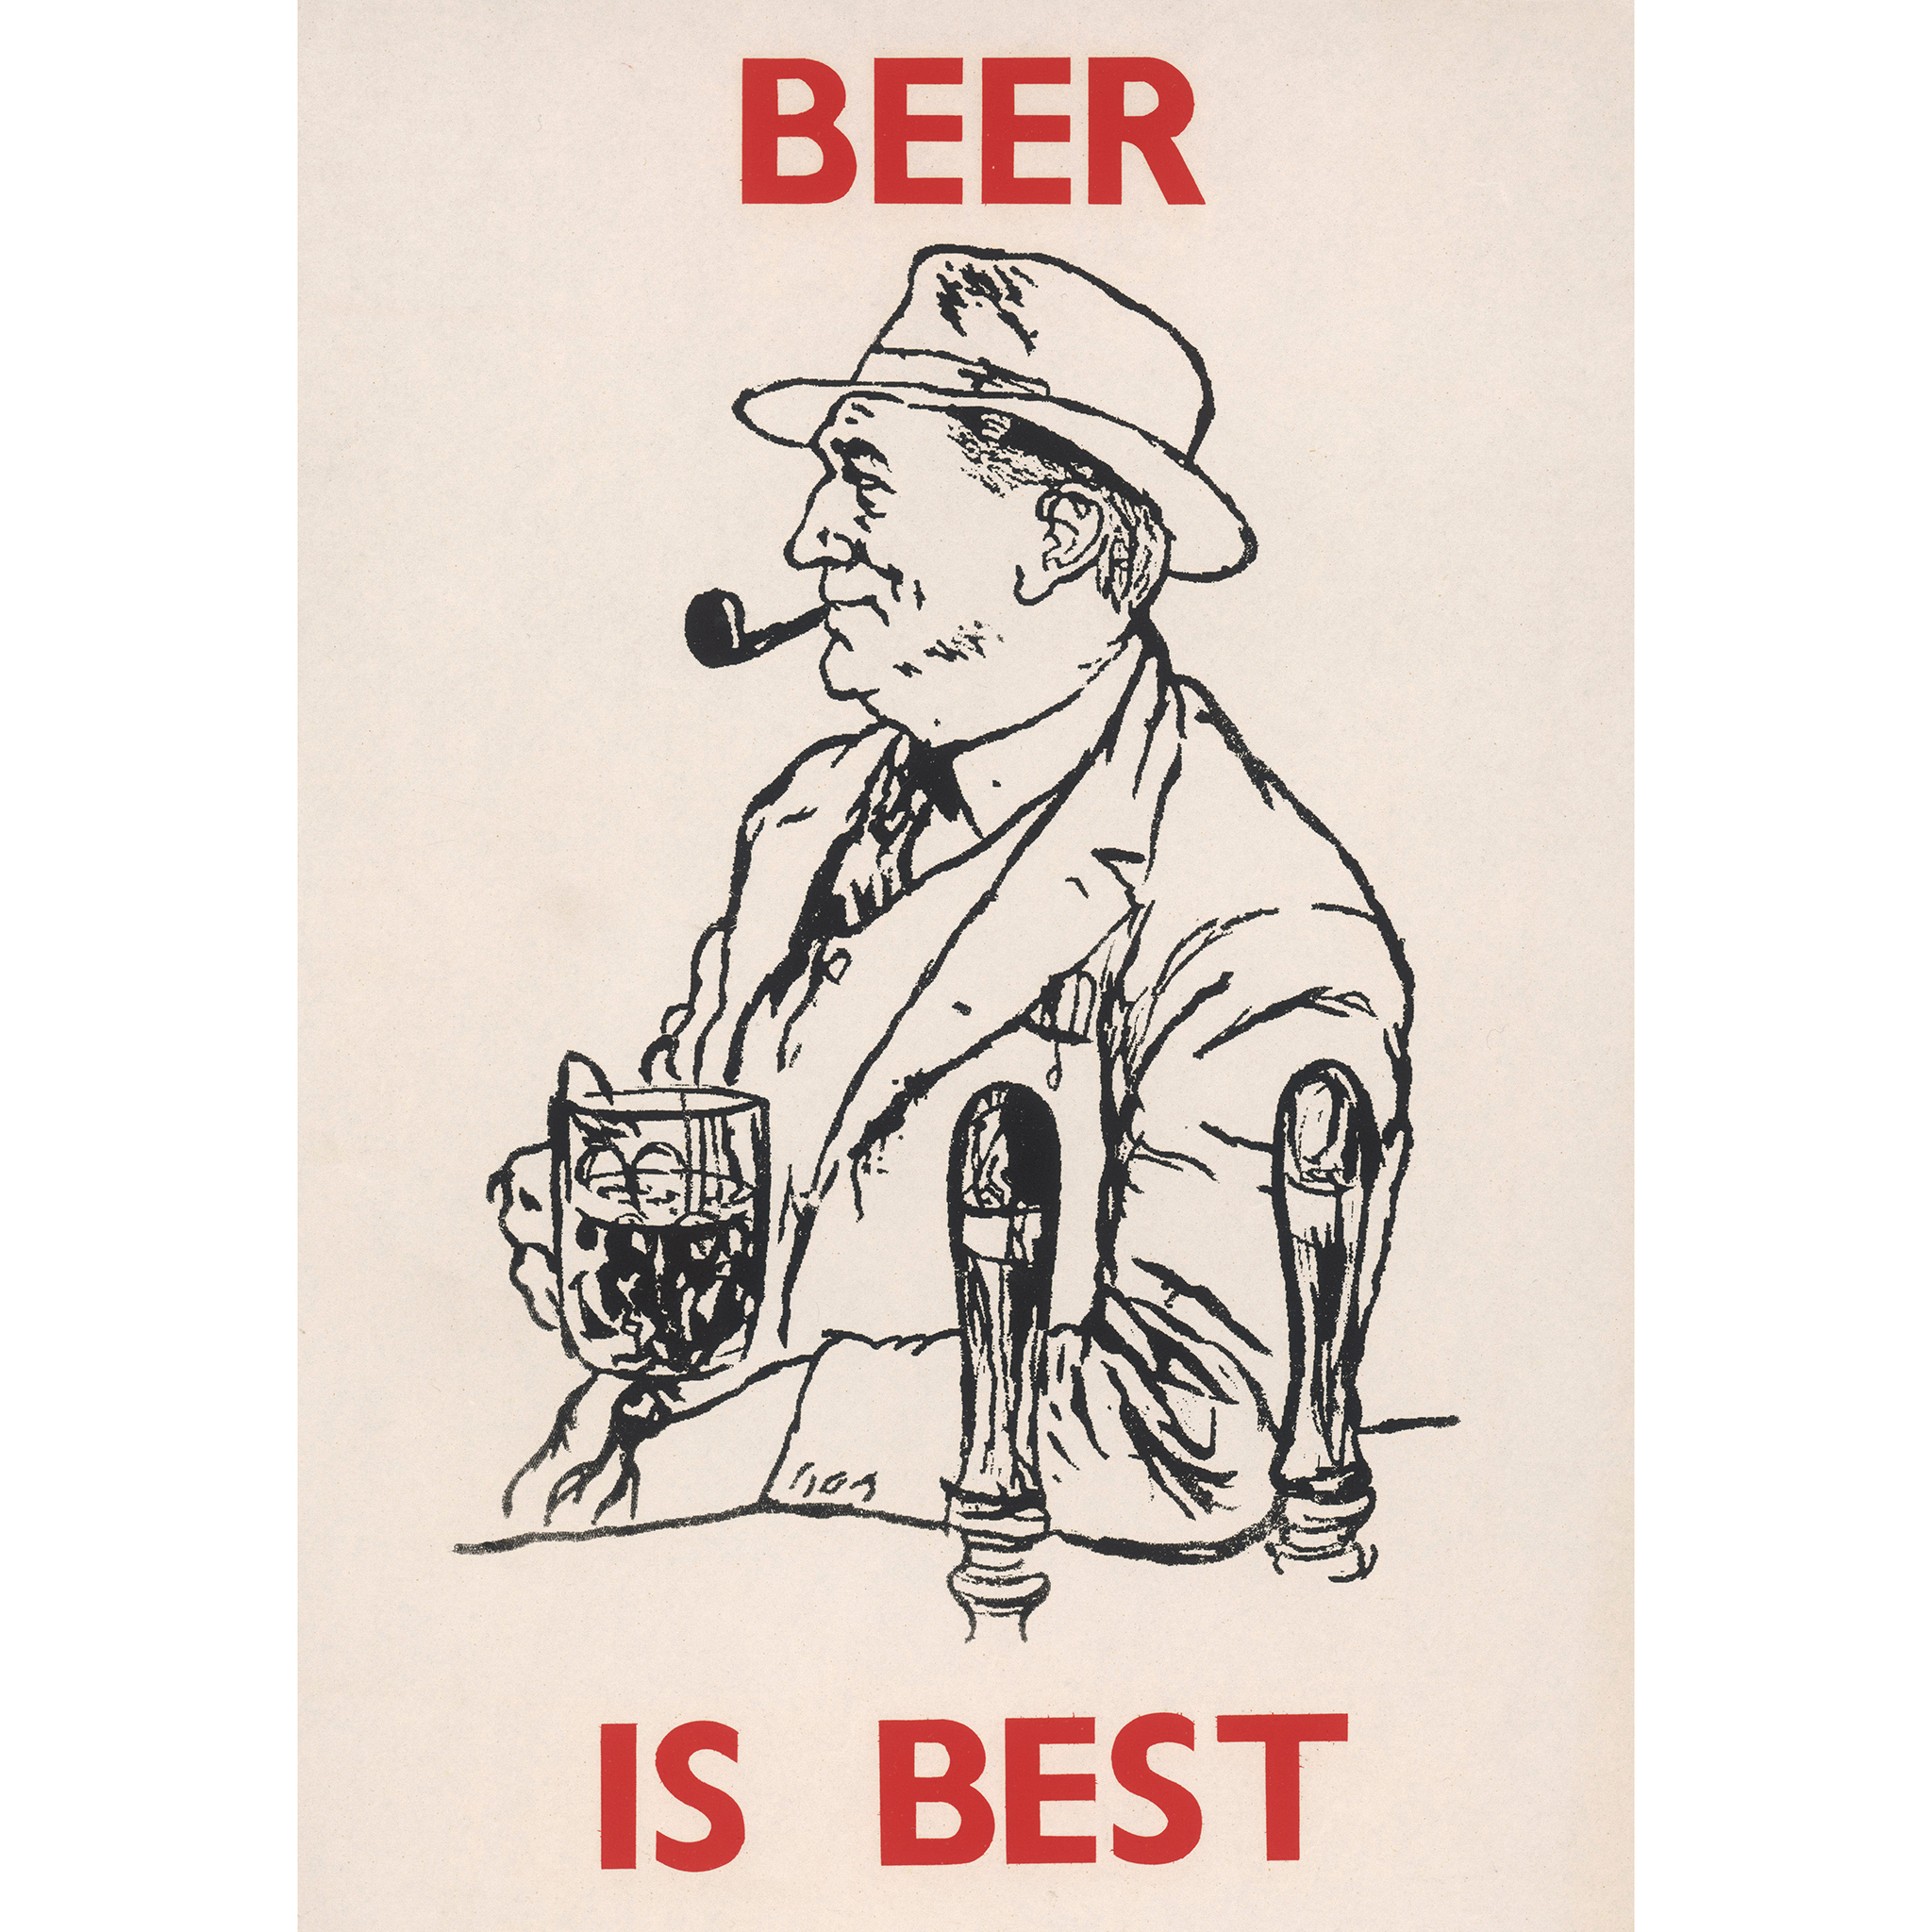 http://www.foodandwine.com/fwx/drink/how-tell-if-you-are-beer-geek-or-beer-snob?adbid=10152706601392026&adbpl=fb&adbpr=17786732025&short_code=2sxfe&xid=FWx_20150415_43825586